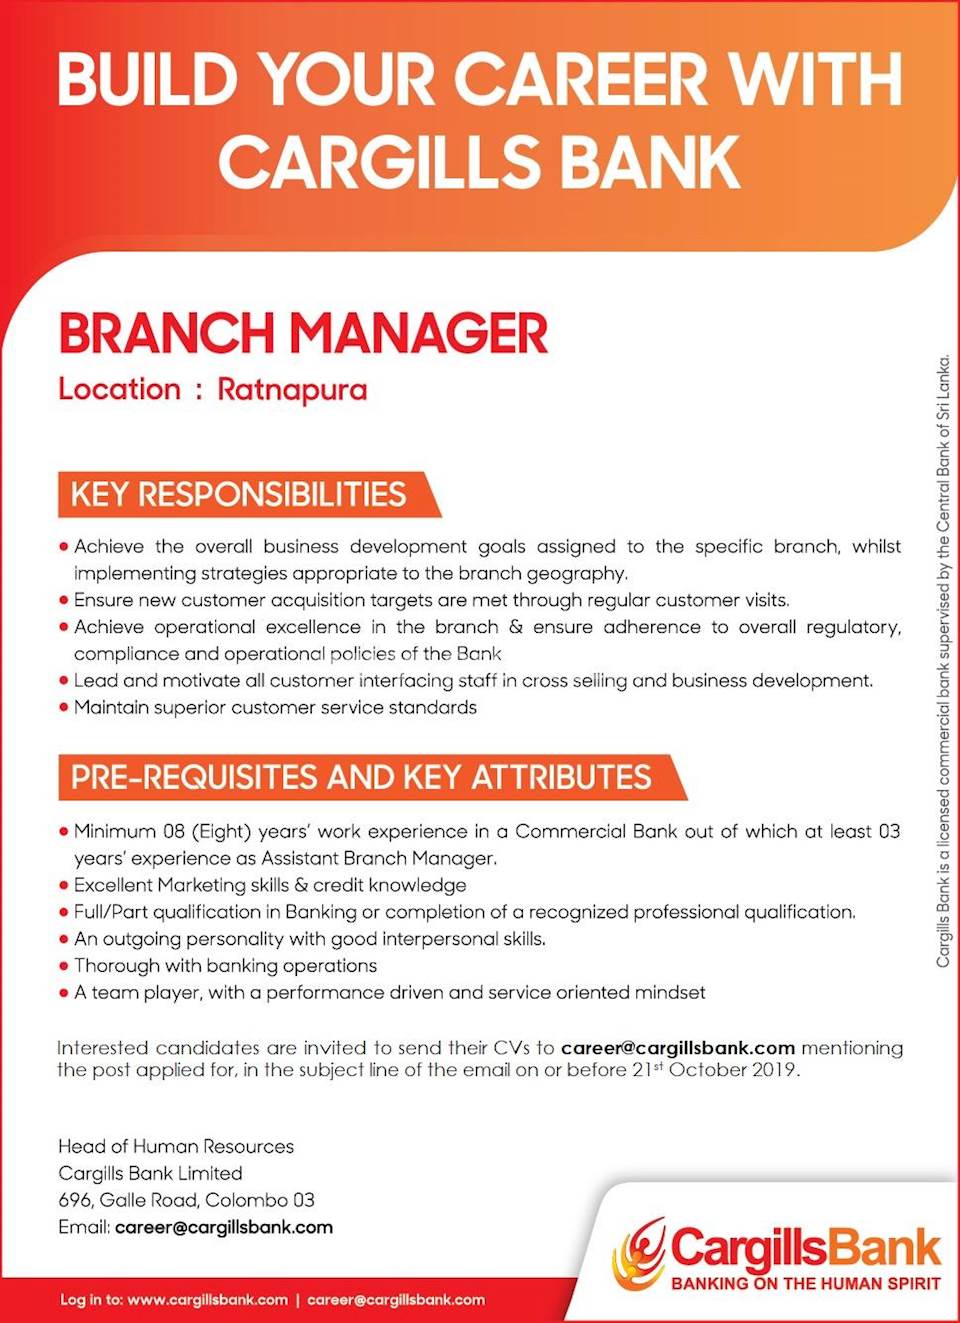 Branch Manager - Ratnapura